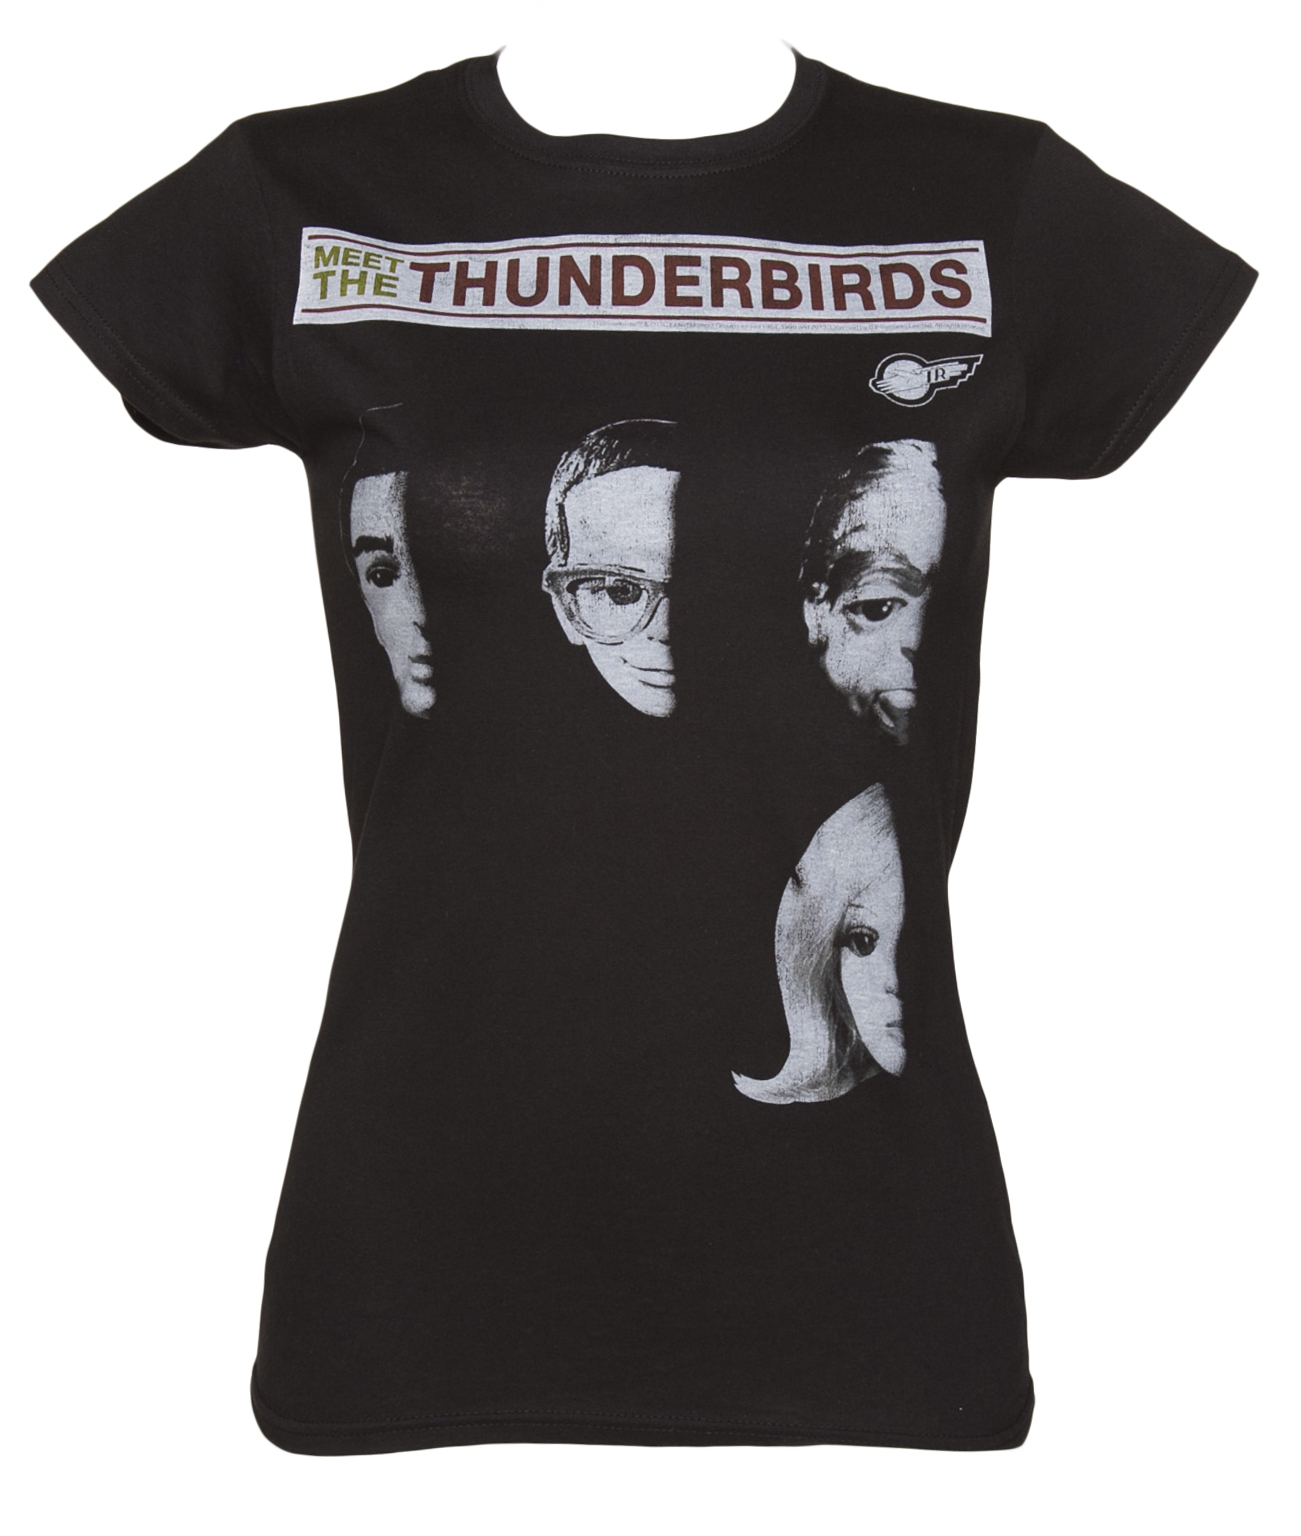 Ladies Meet The Thunderbirds T-Shirt